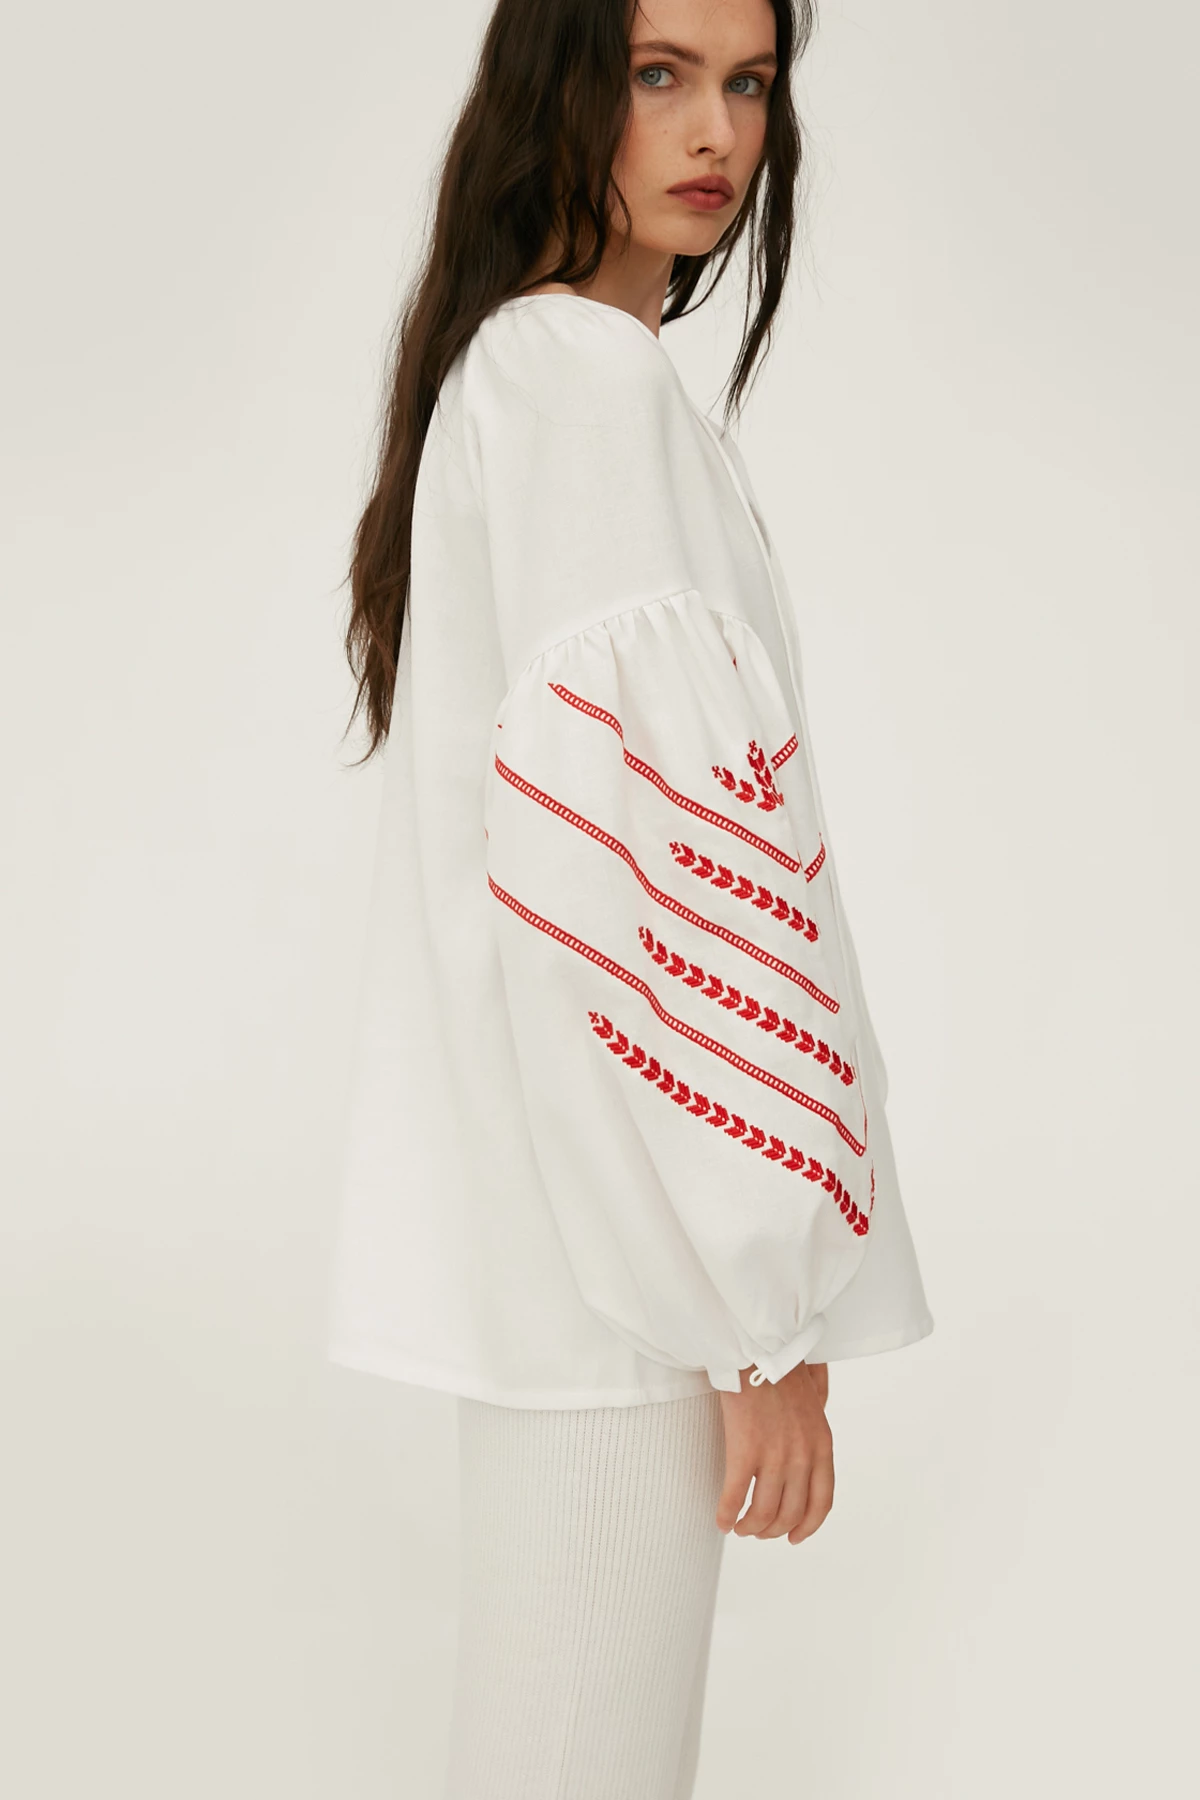 Milky linen vyshyvanka shirt with wheat embroidery, photo 5